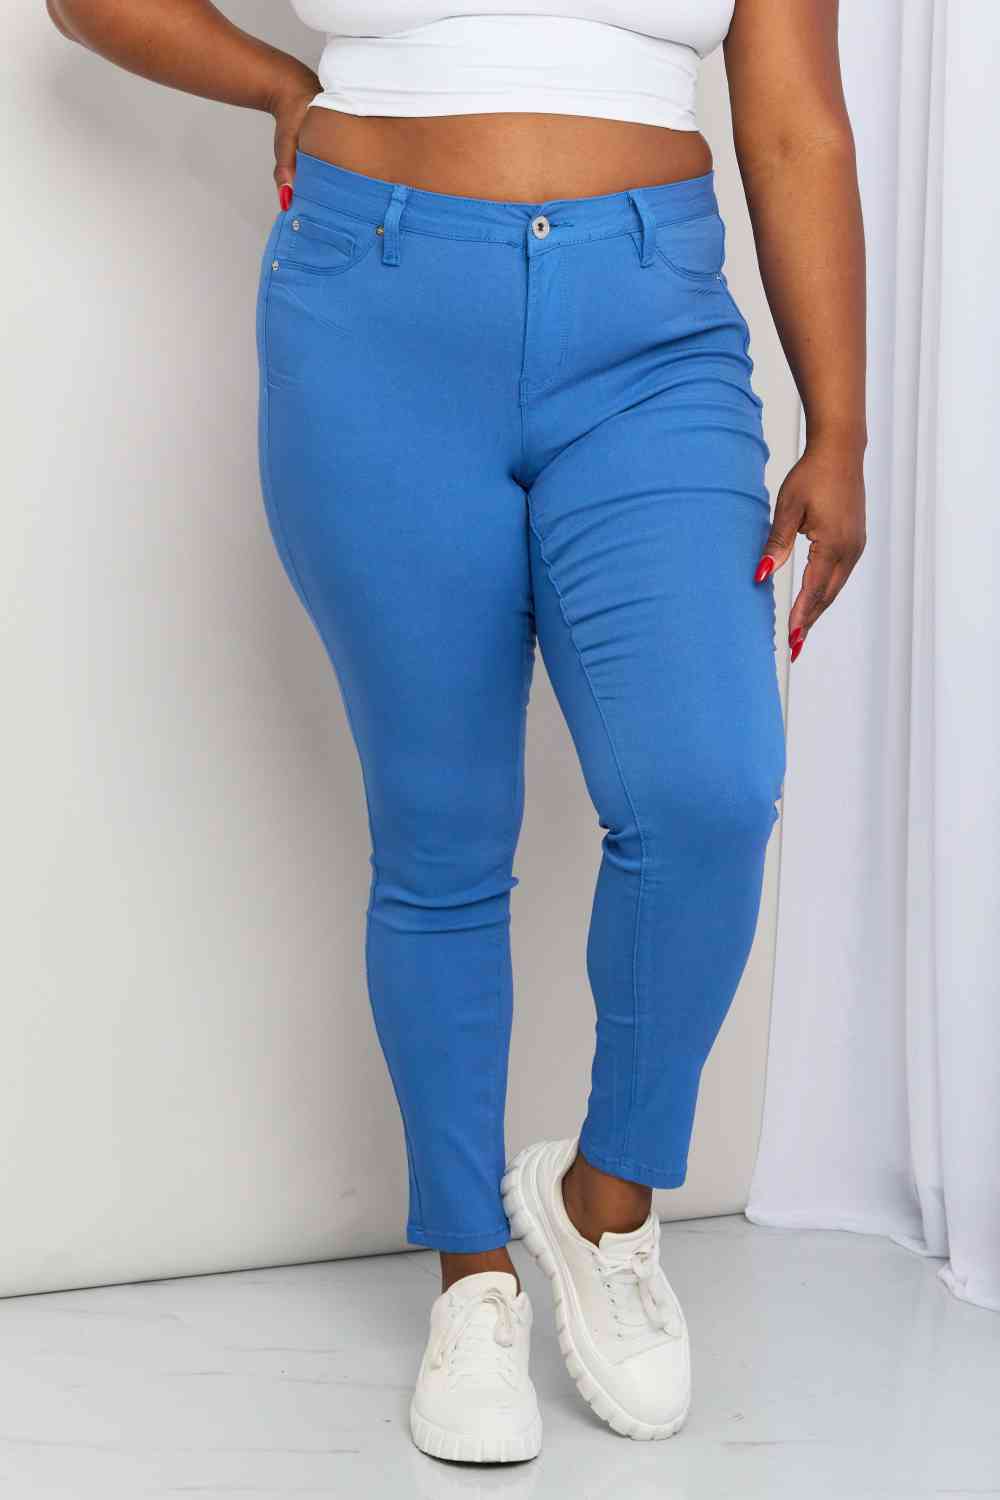 YMI Jeanswear Kate Hyper-Stretch Jean skinny taille moyenne pleine taille en bleu électrique